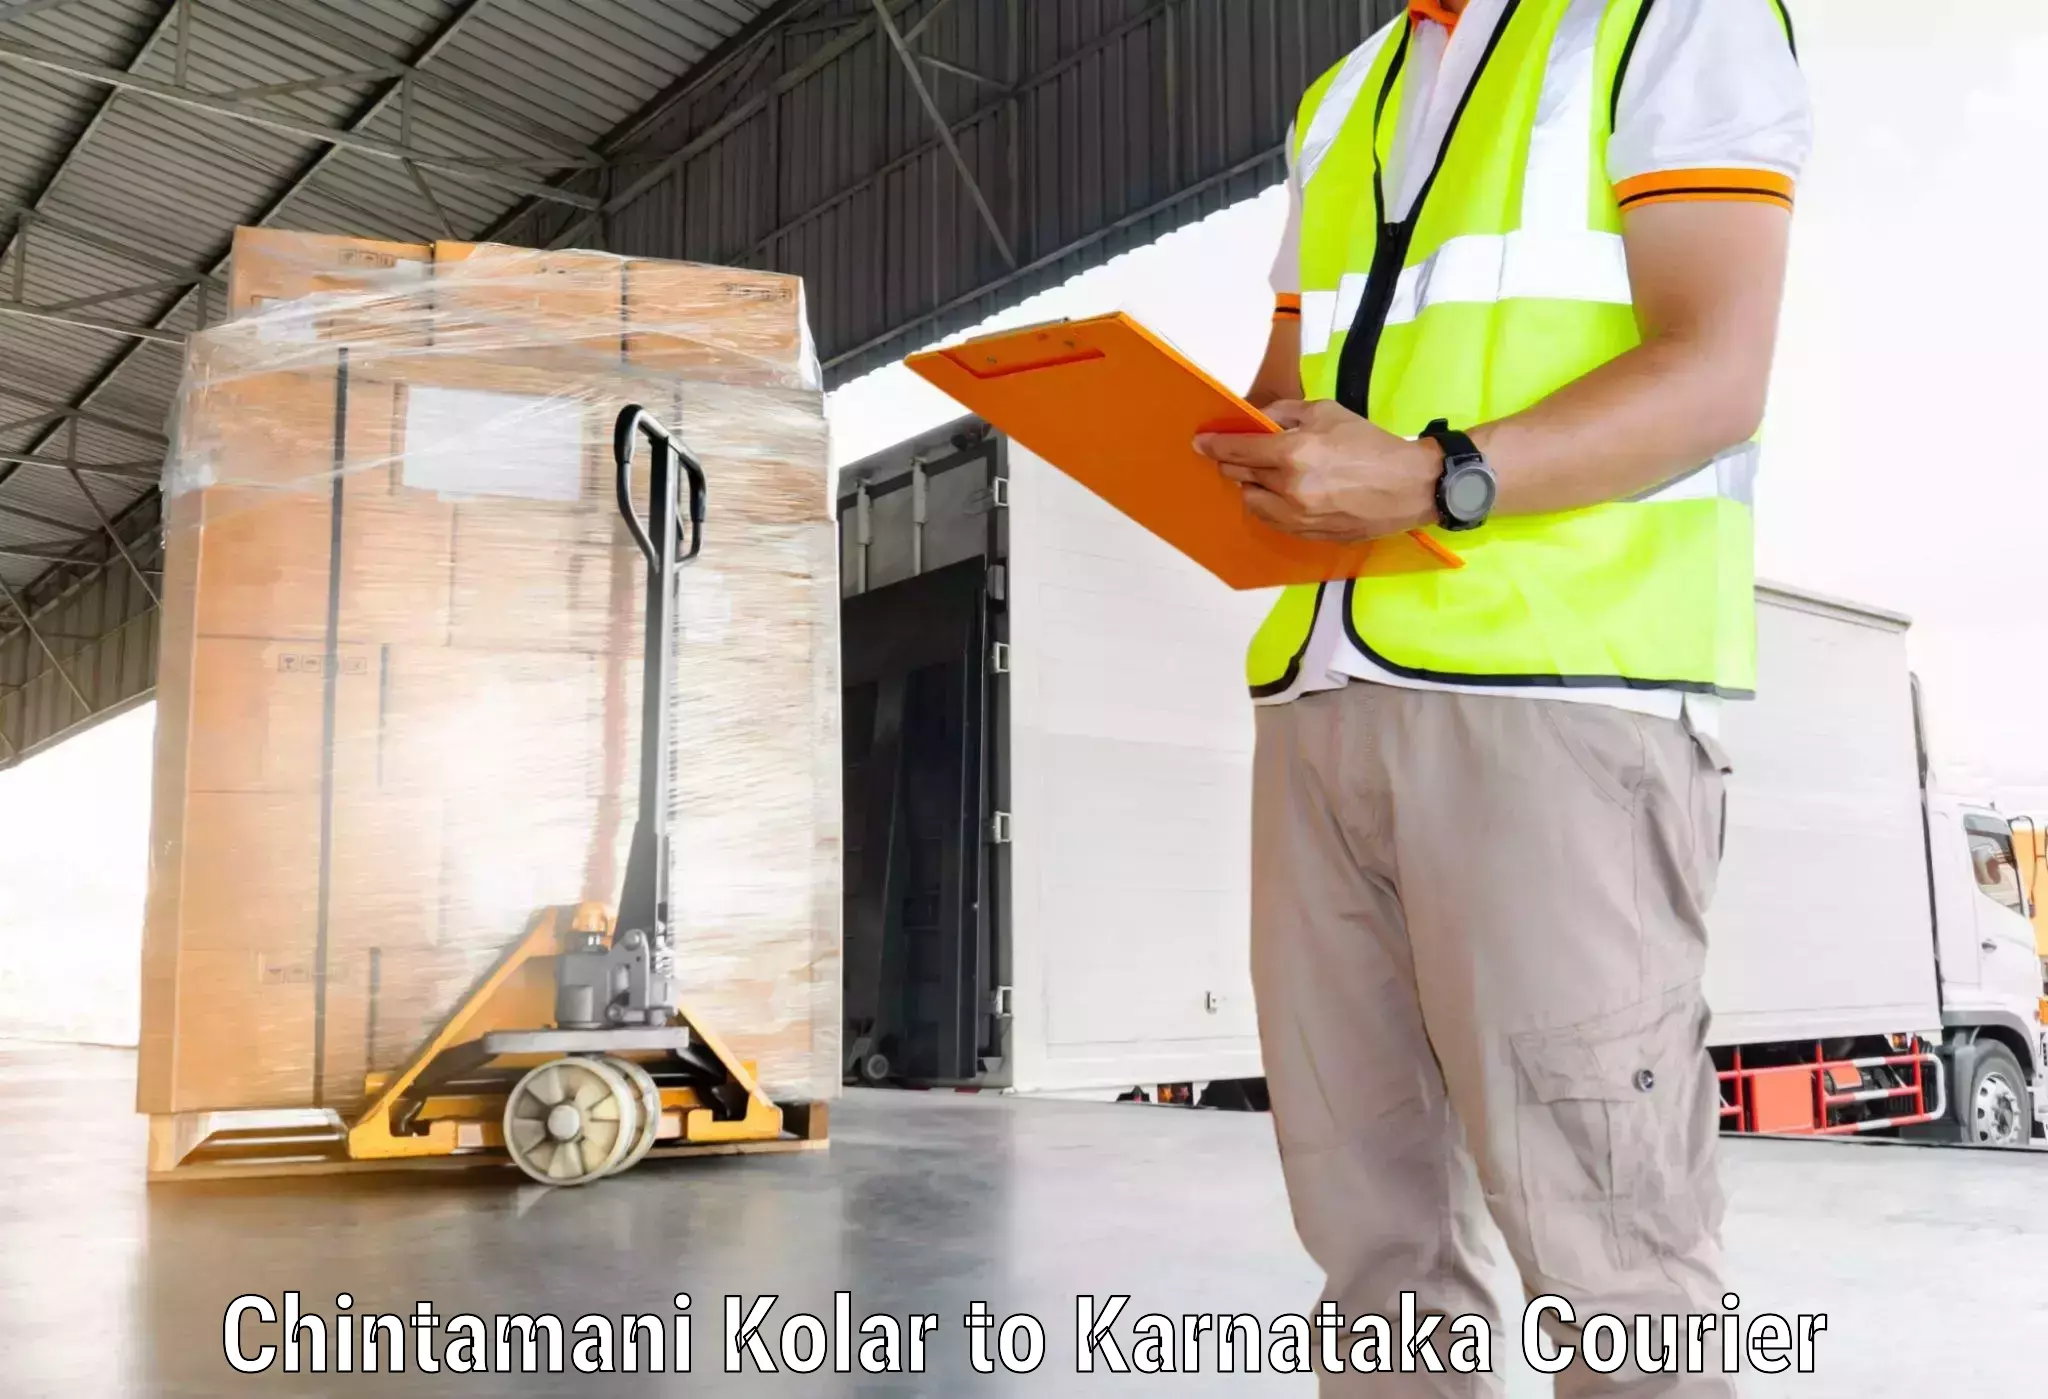 Efficient parcel tracking Chintamani Kolar to Chikkamagalur